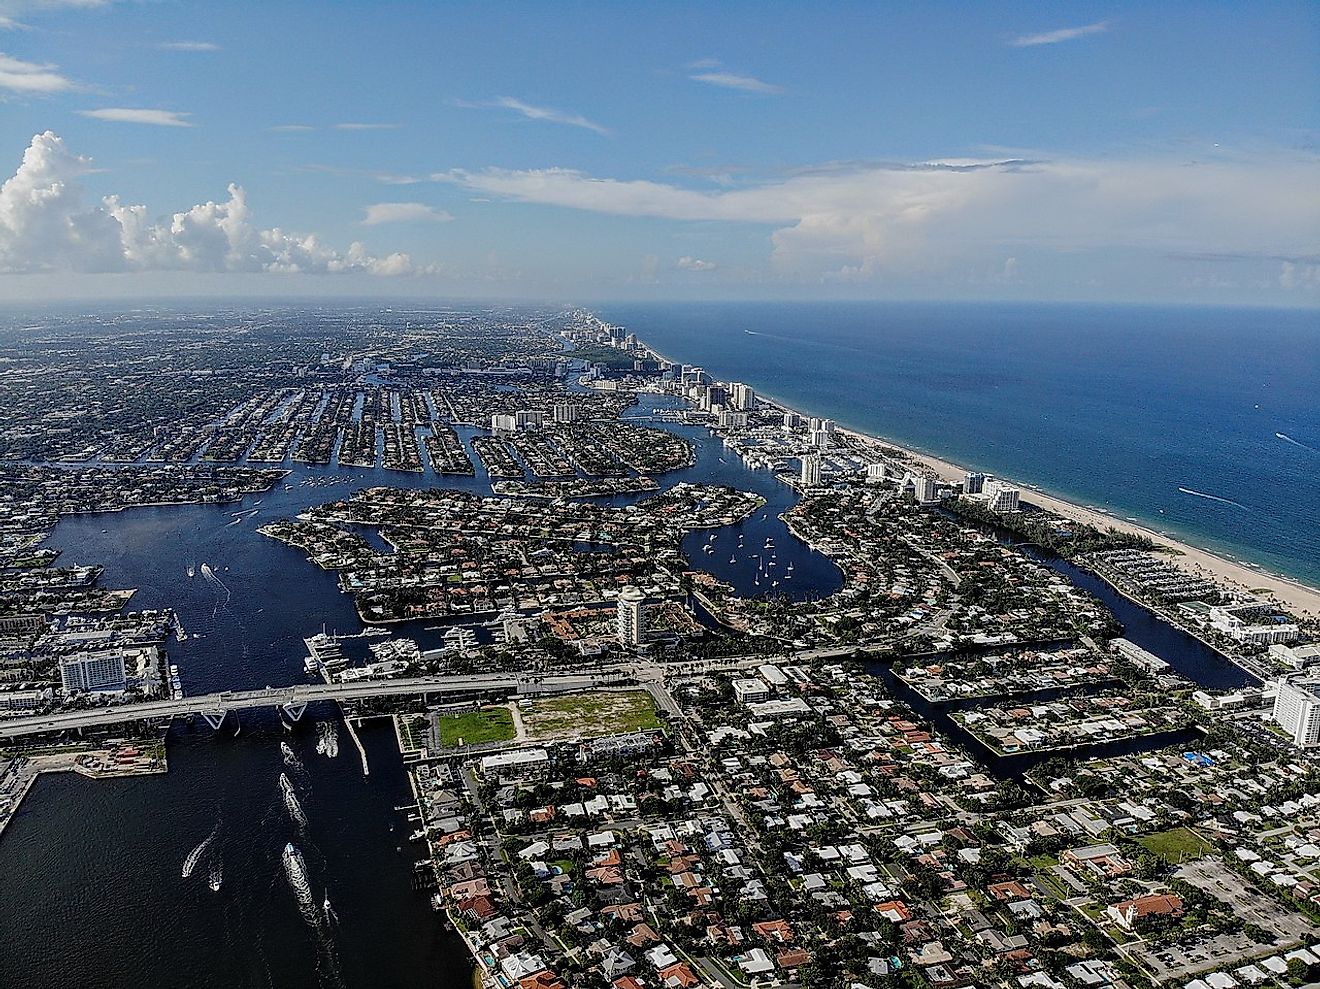 Aerial photo of Fort Lauderdale. Image credit: Yanjipy/Wikimedia.org